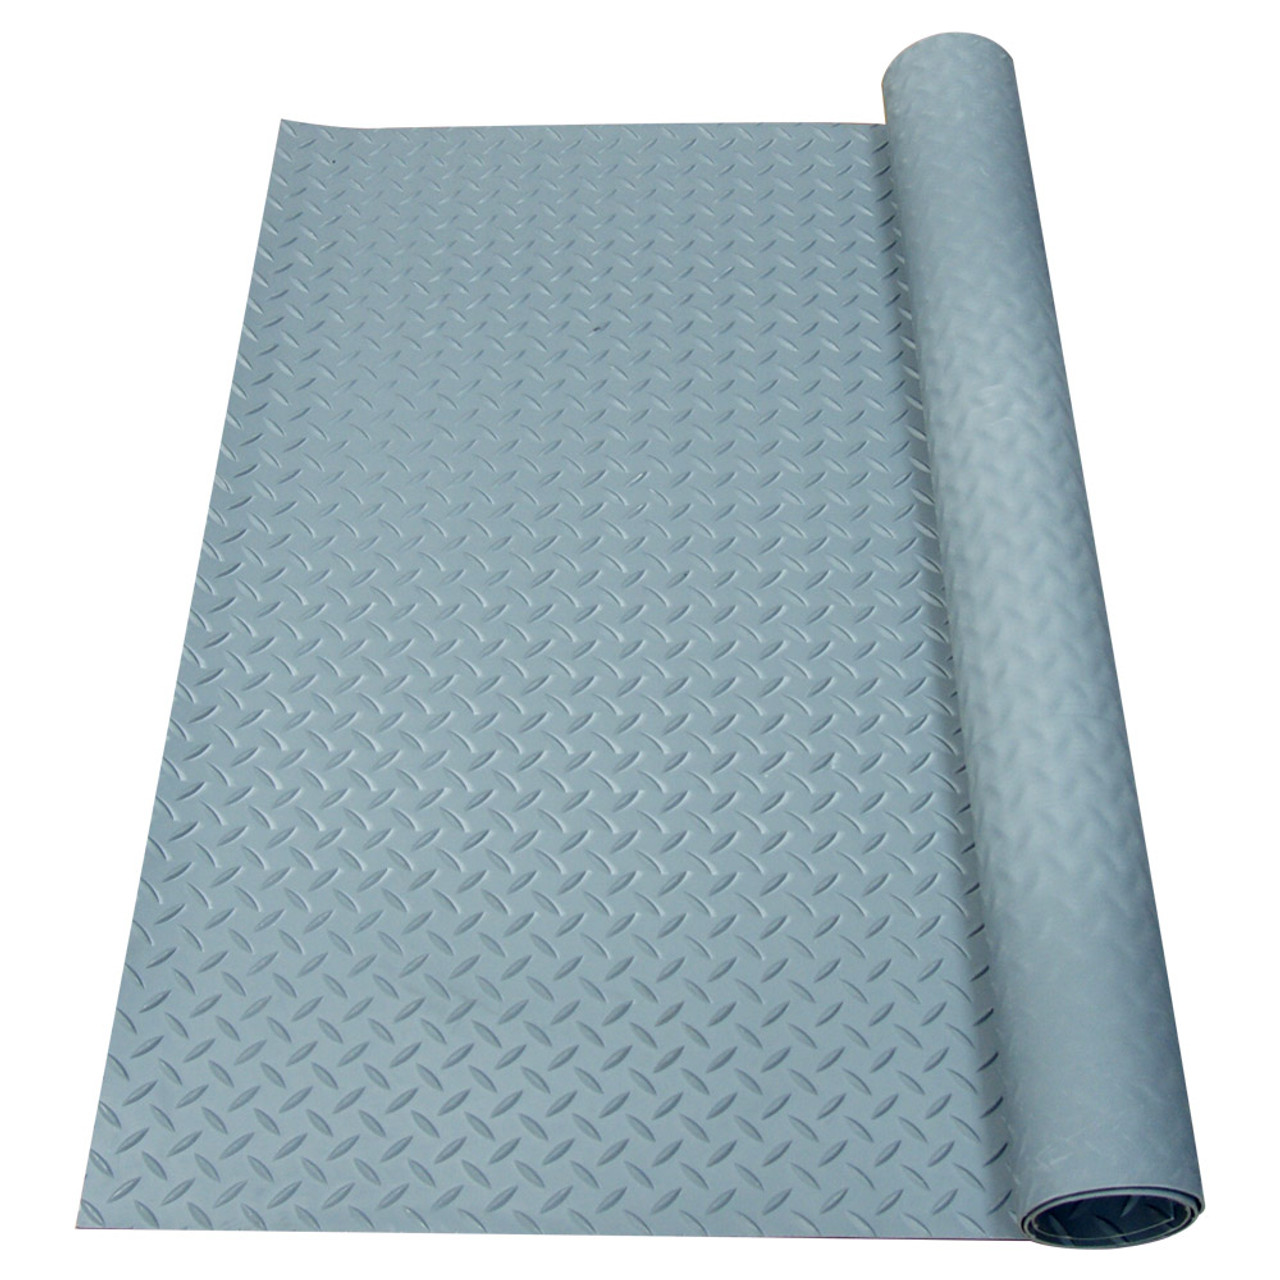 Diamond-Plate Matting  Anti-Fatigue Floor Mats and Ergonomic Flooring